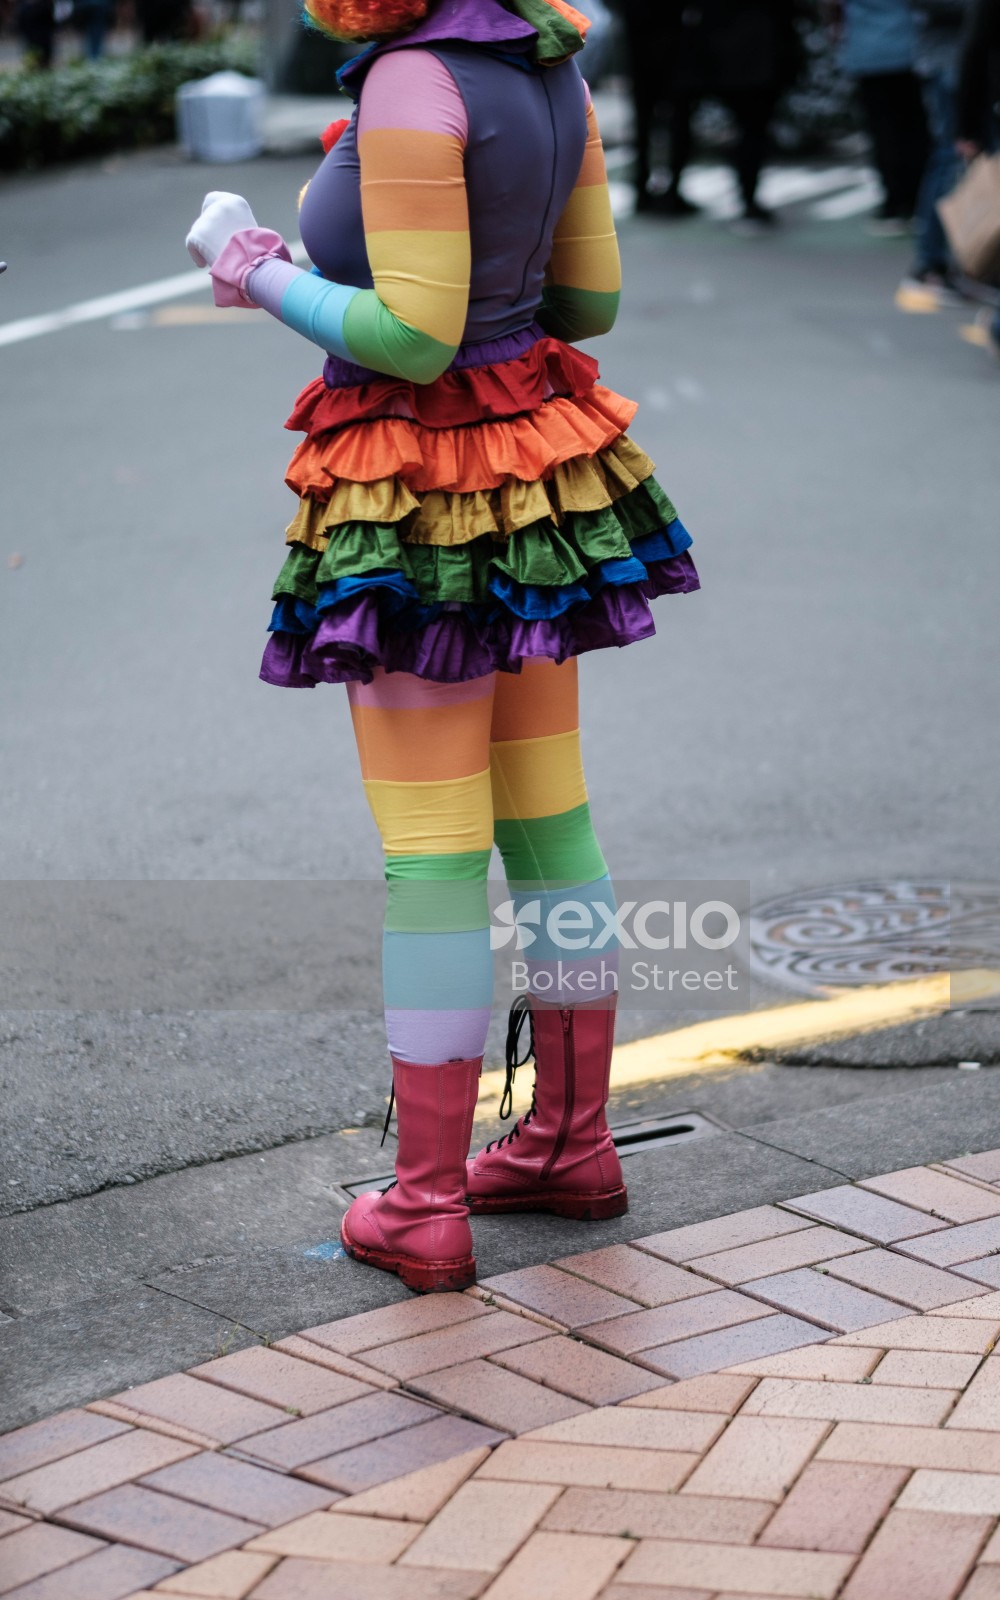 Colourful fun clown costume